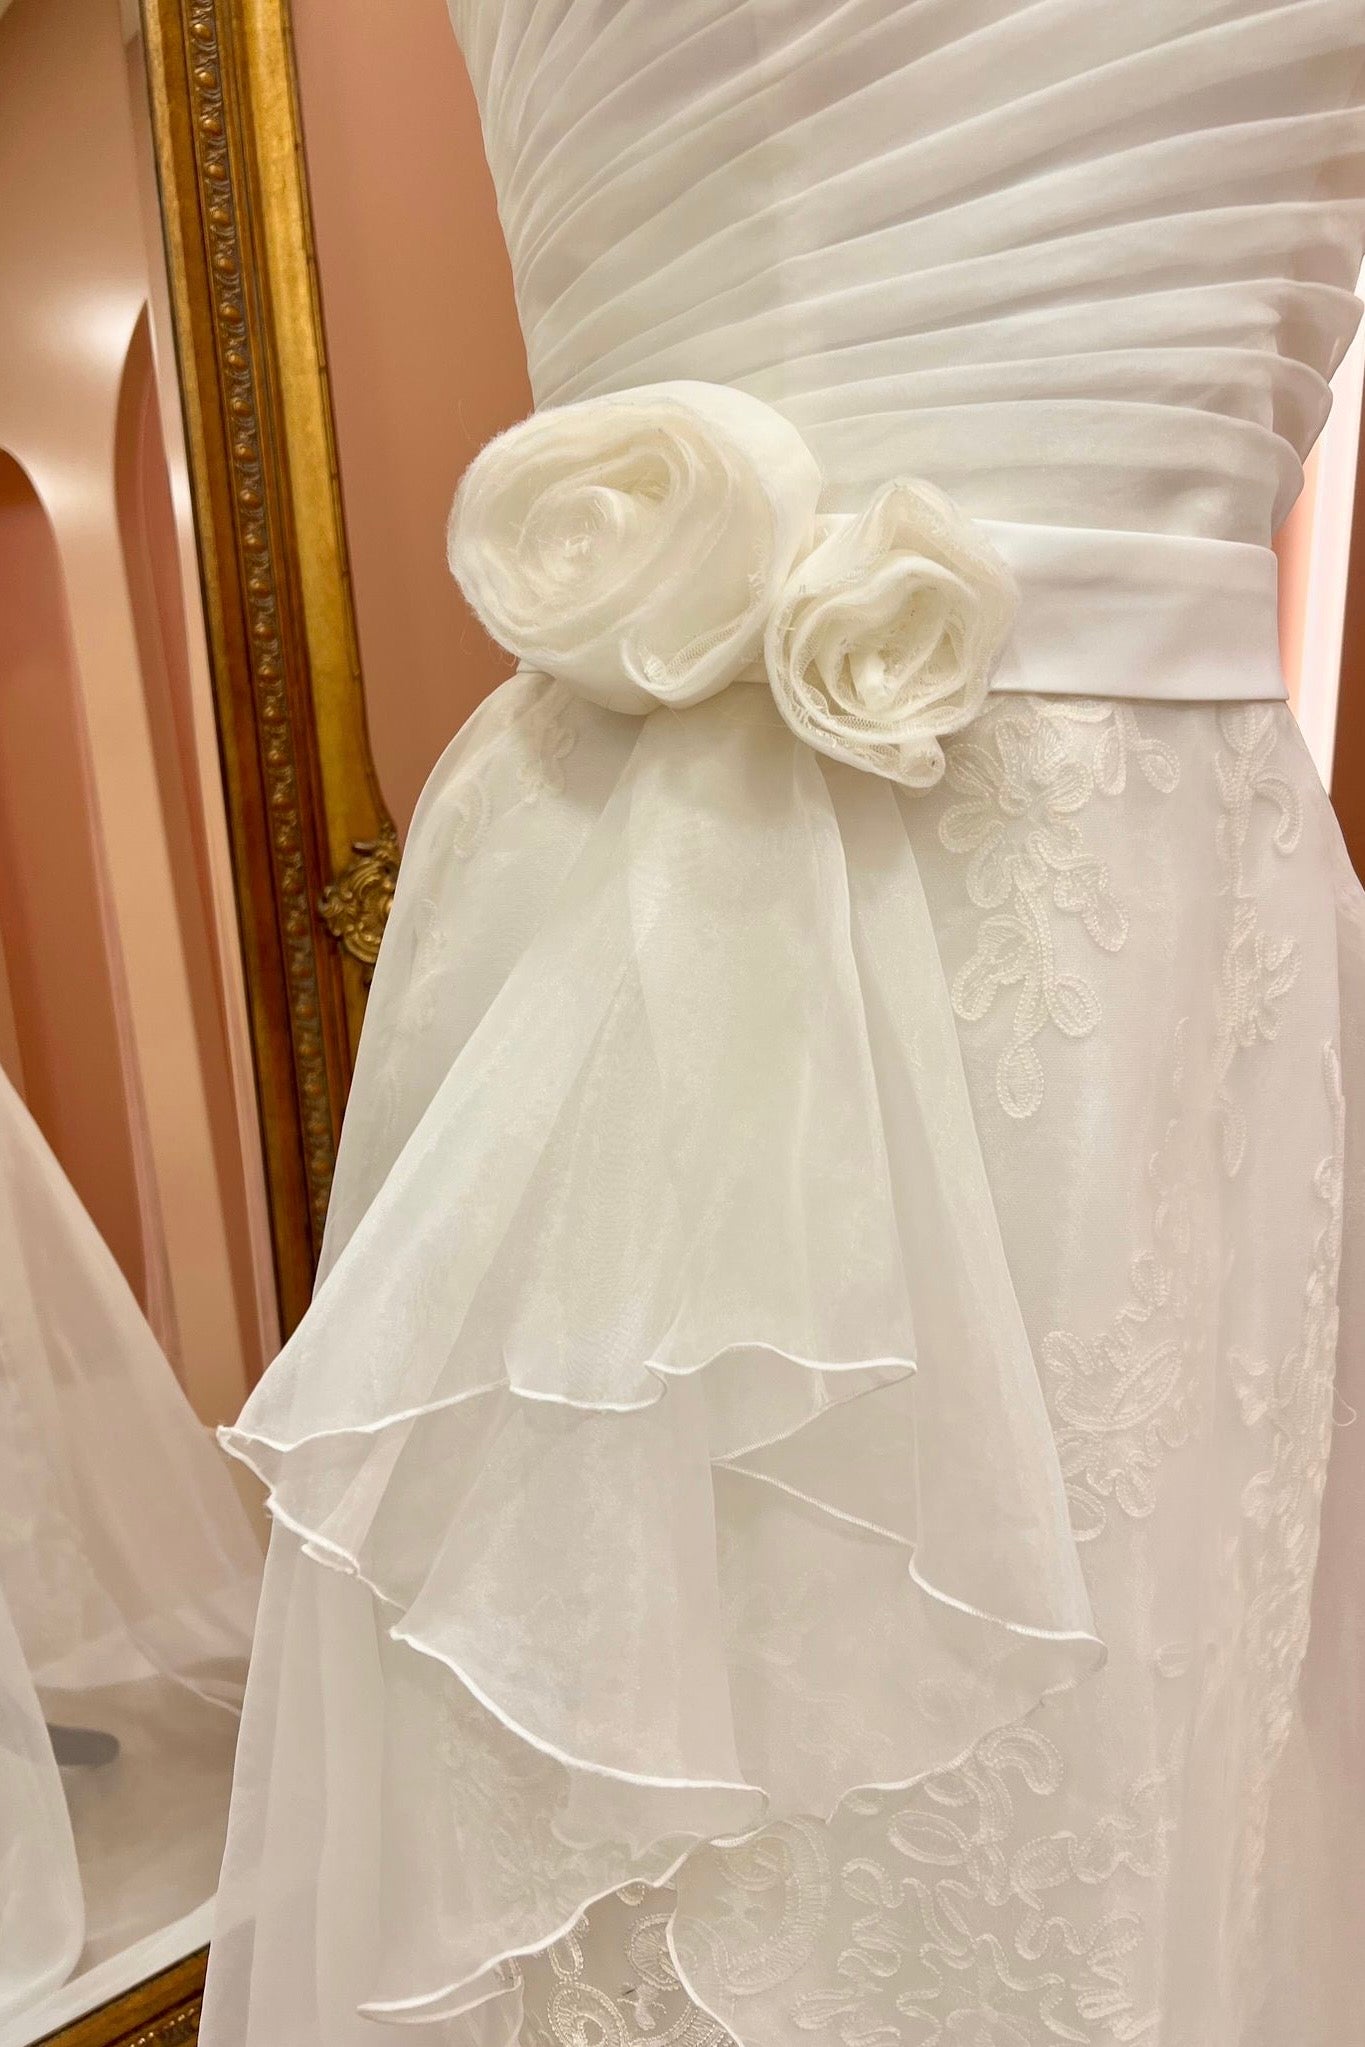 Sweetest Lace Pre-Loved Wedding Dress 38